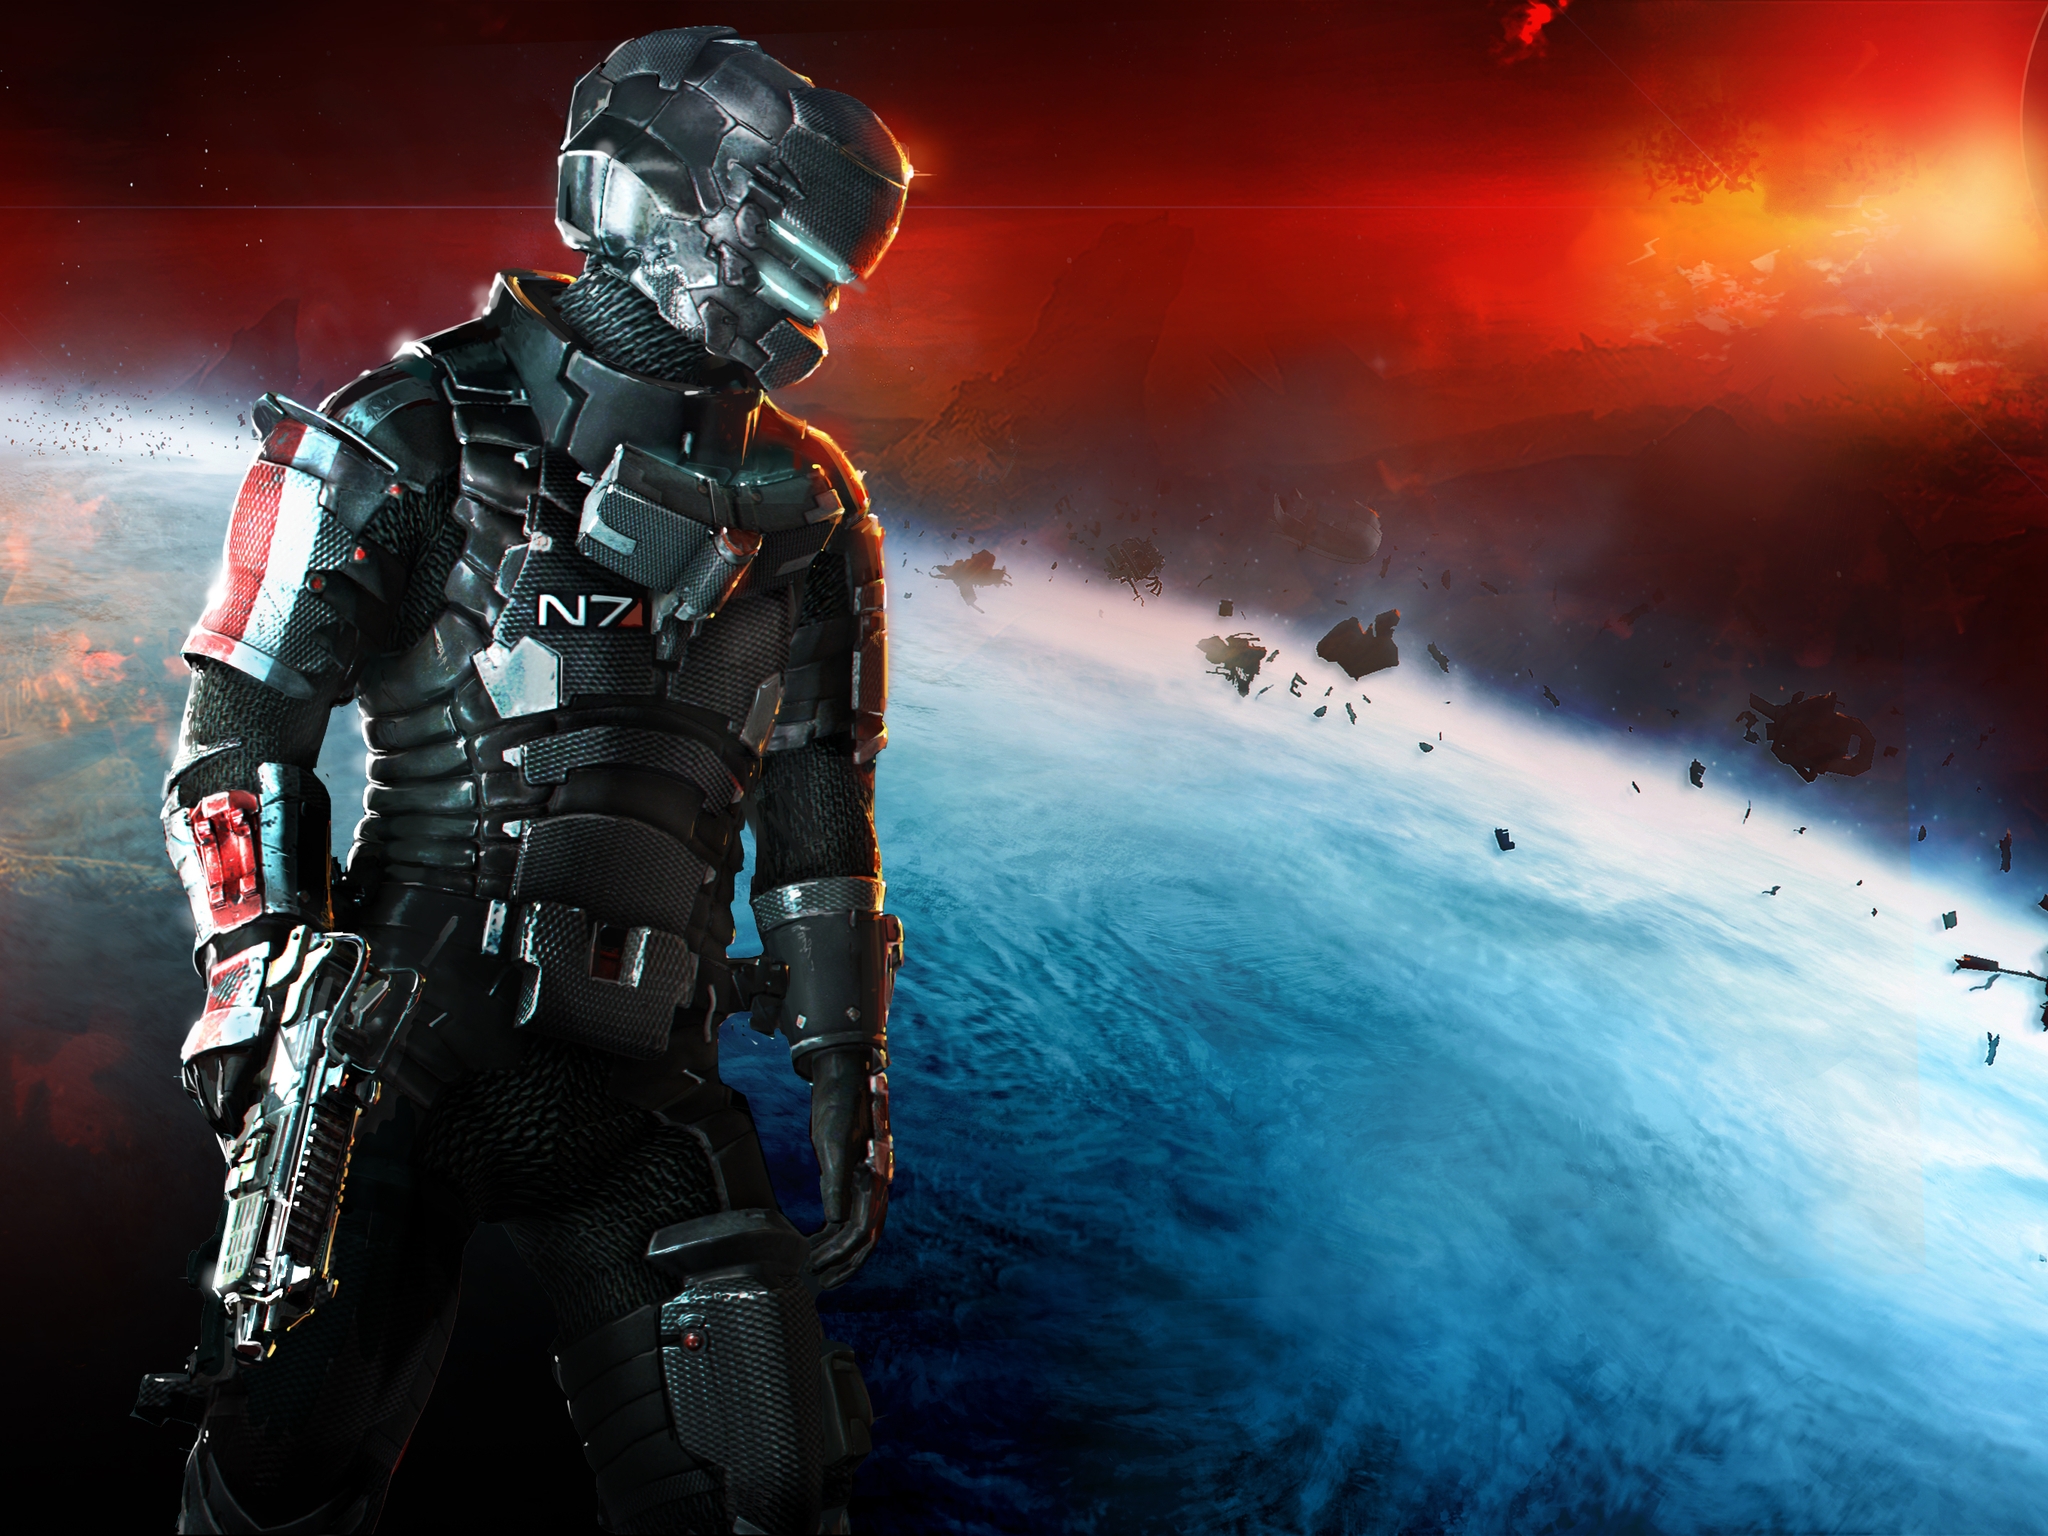 Картинка: Dead Space 2, инженер, Айзек Кларк, N7, костюм, оружие, скафандр, космос, планета, мусор